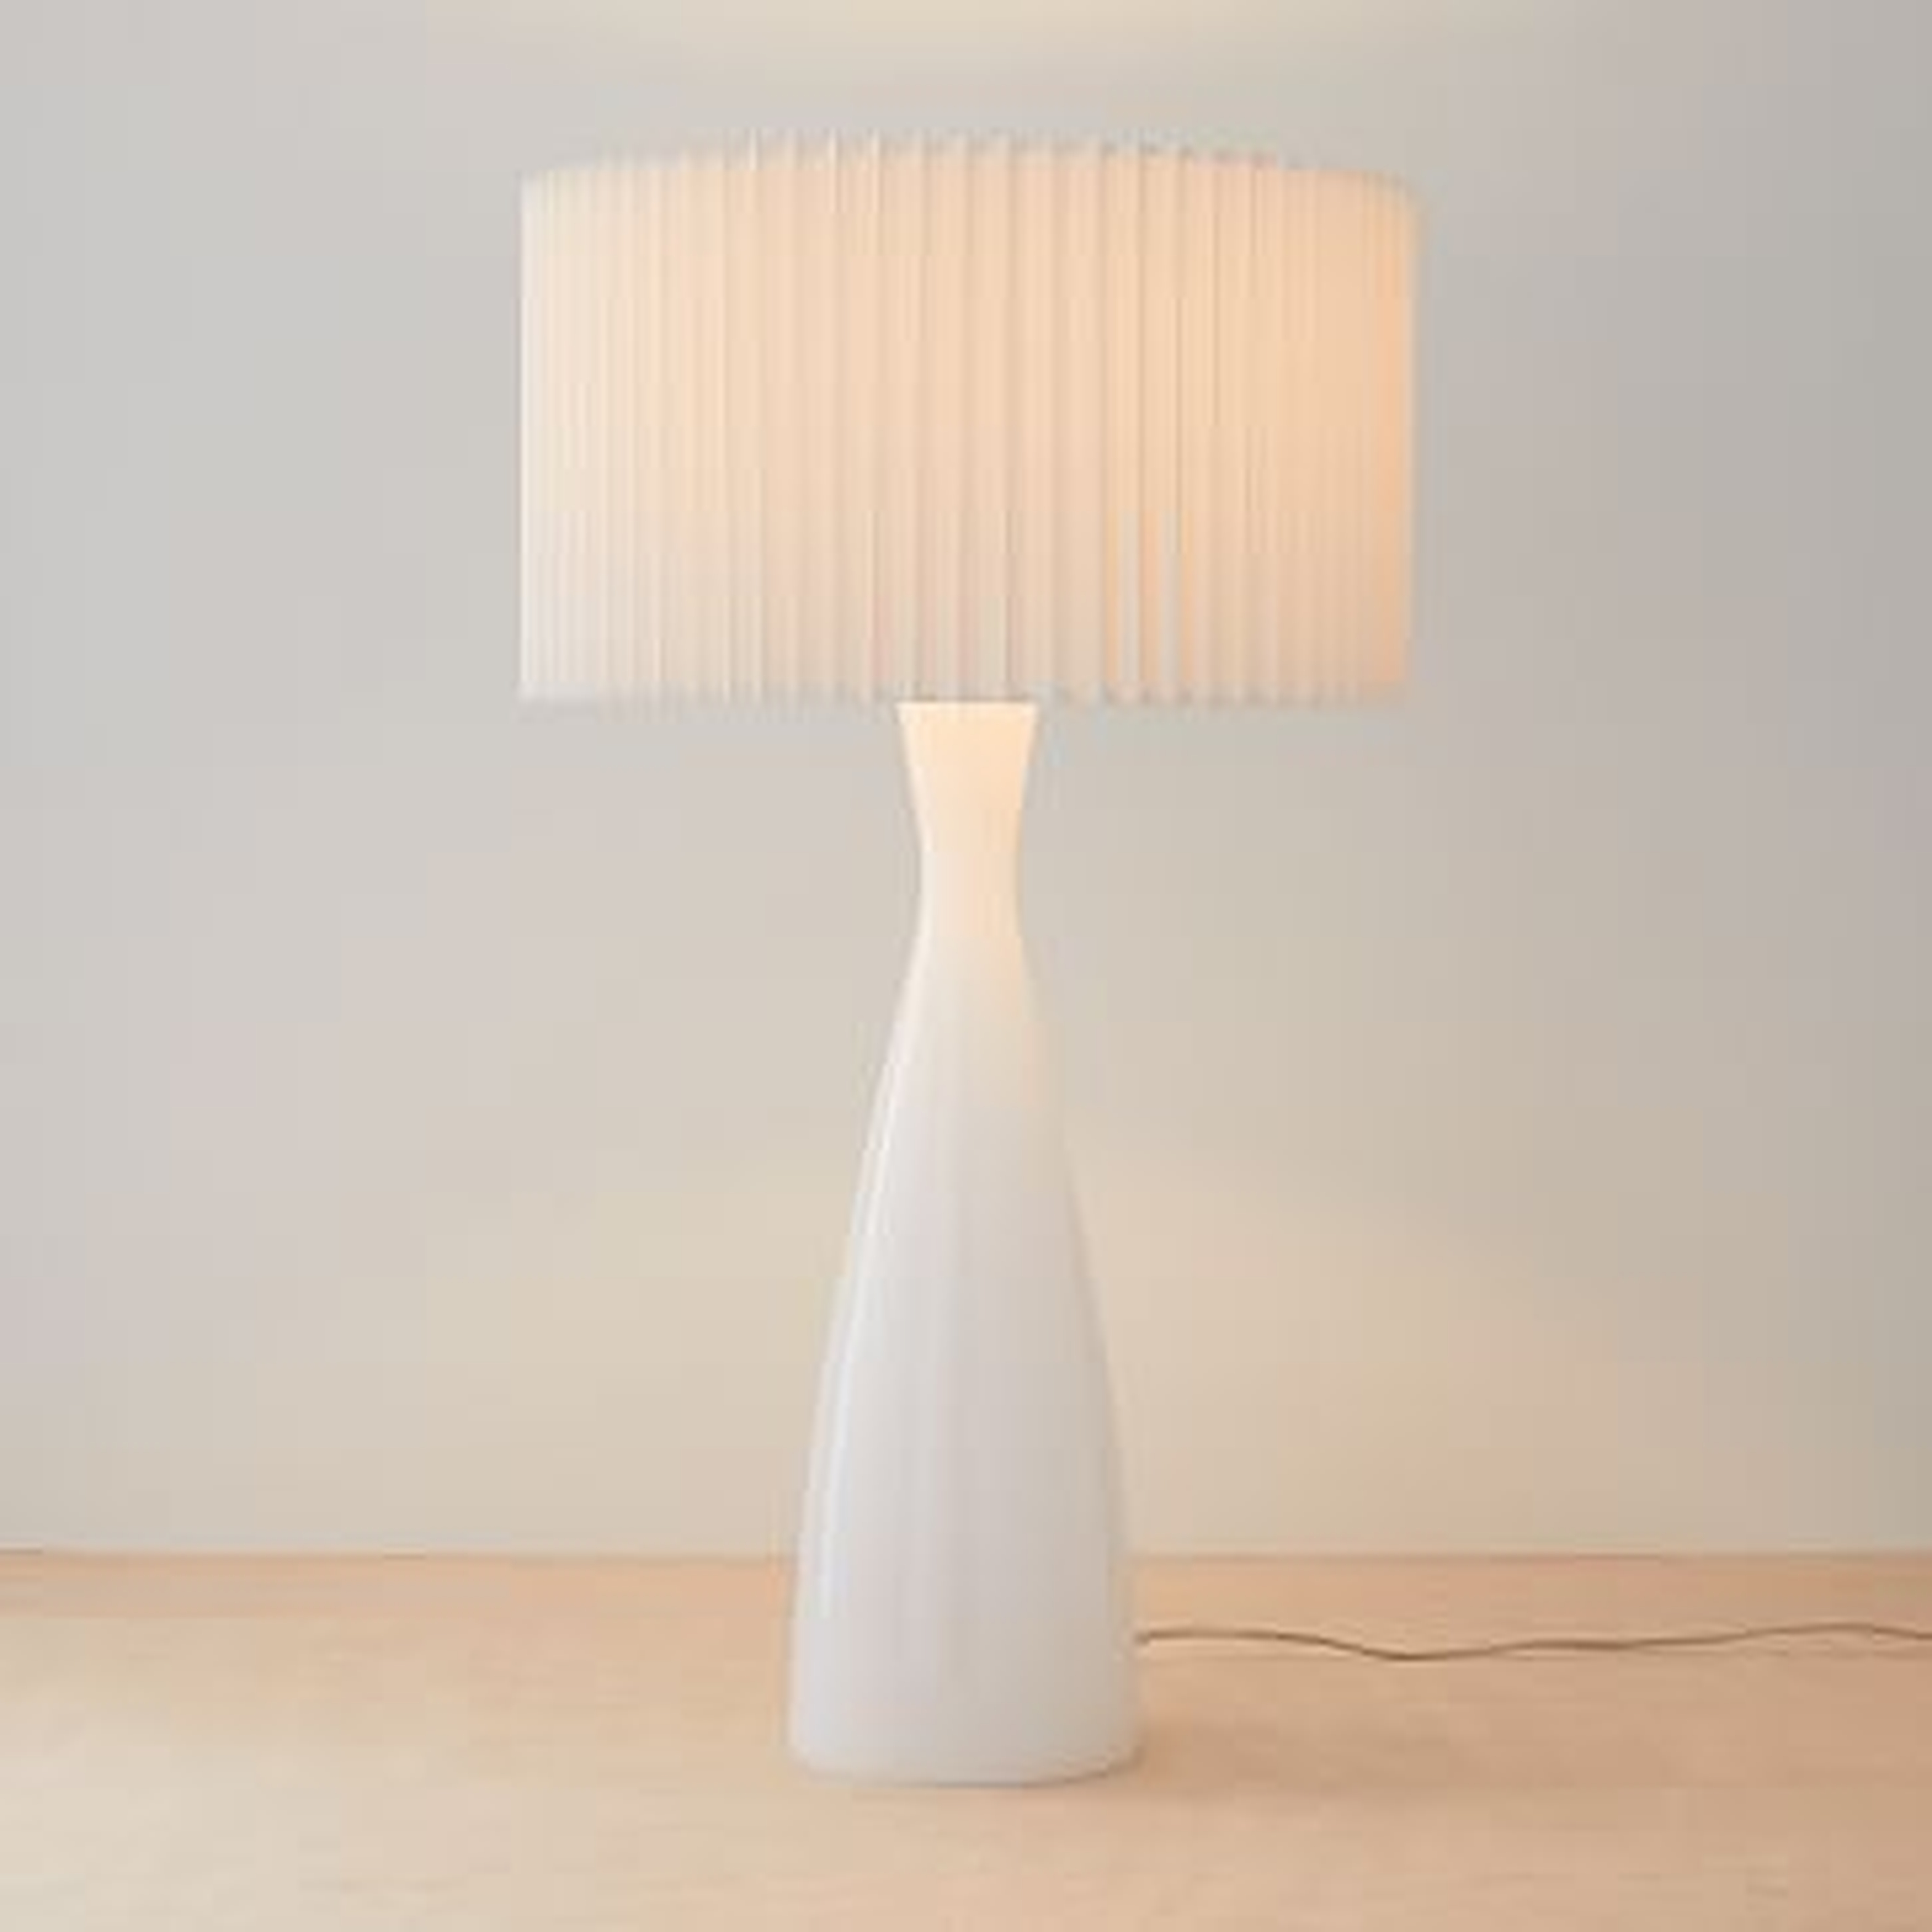 Delilah Table Lamp, Large, White, Cased, Set of 2 - West Elm